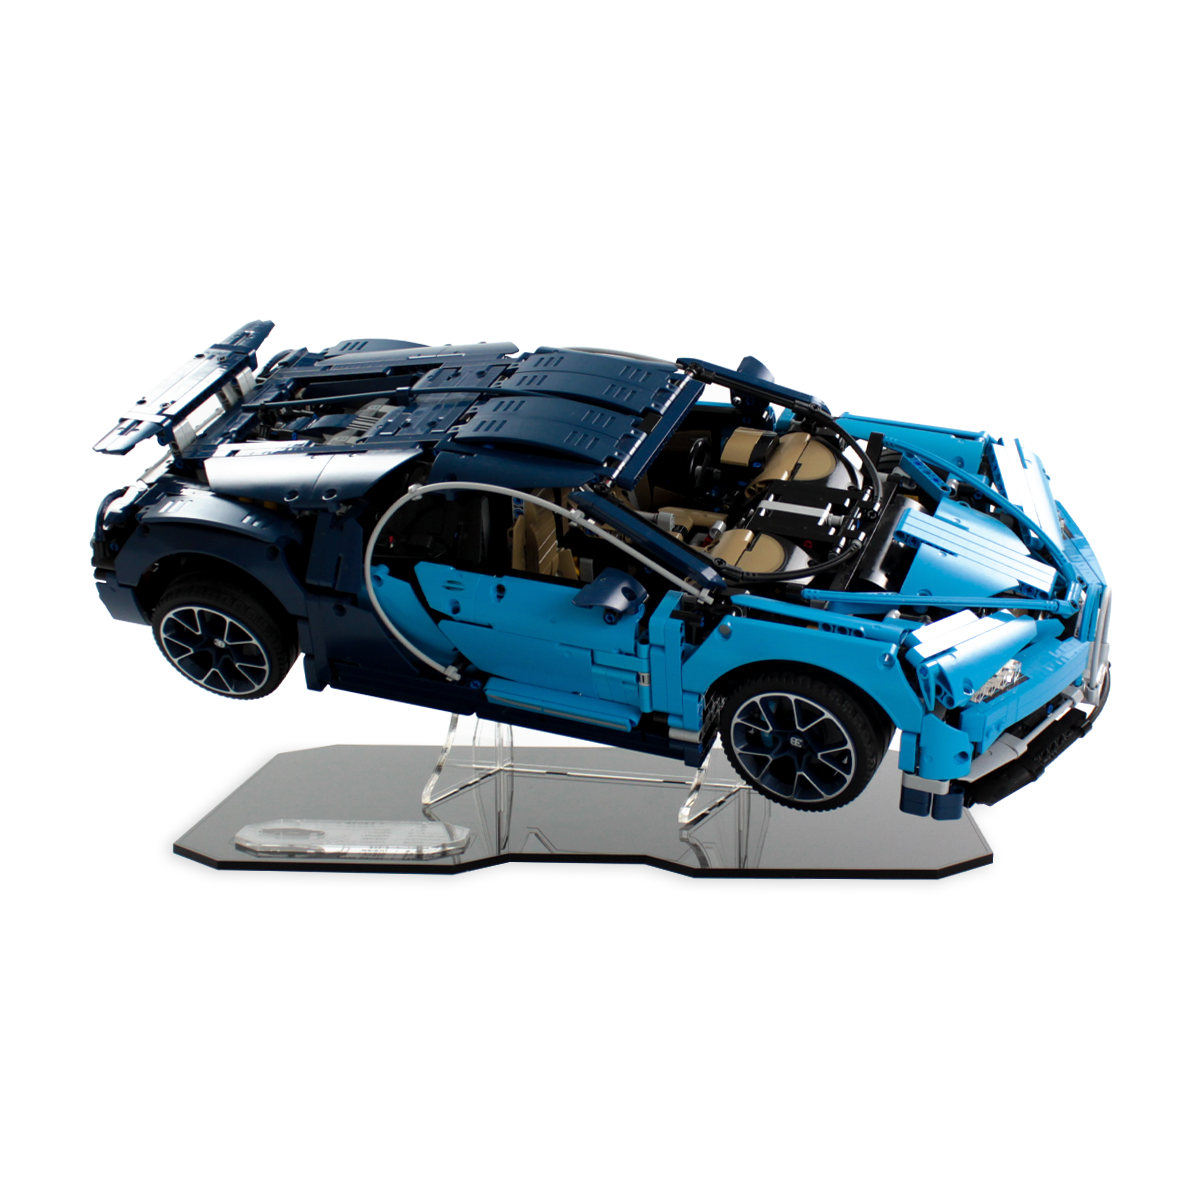 Acrylic Display Stand for LEGO Technic Bugatti Chiron 42083